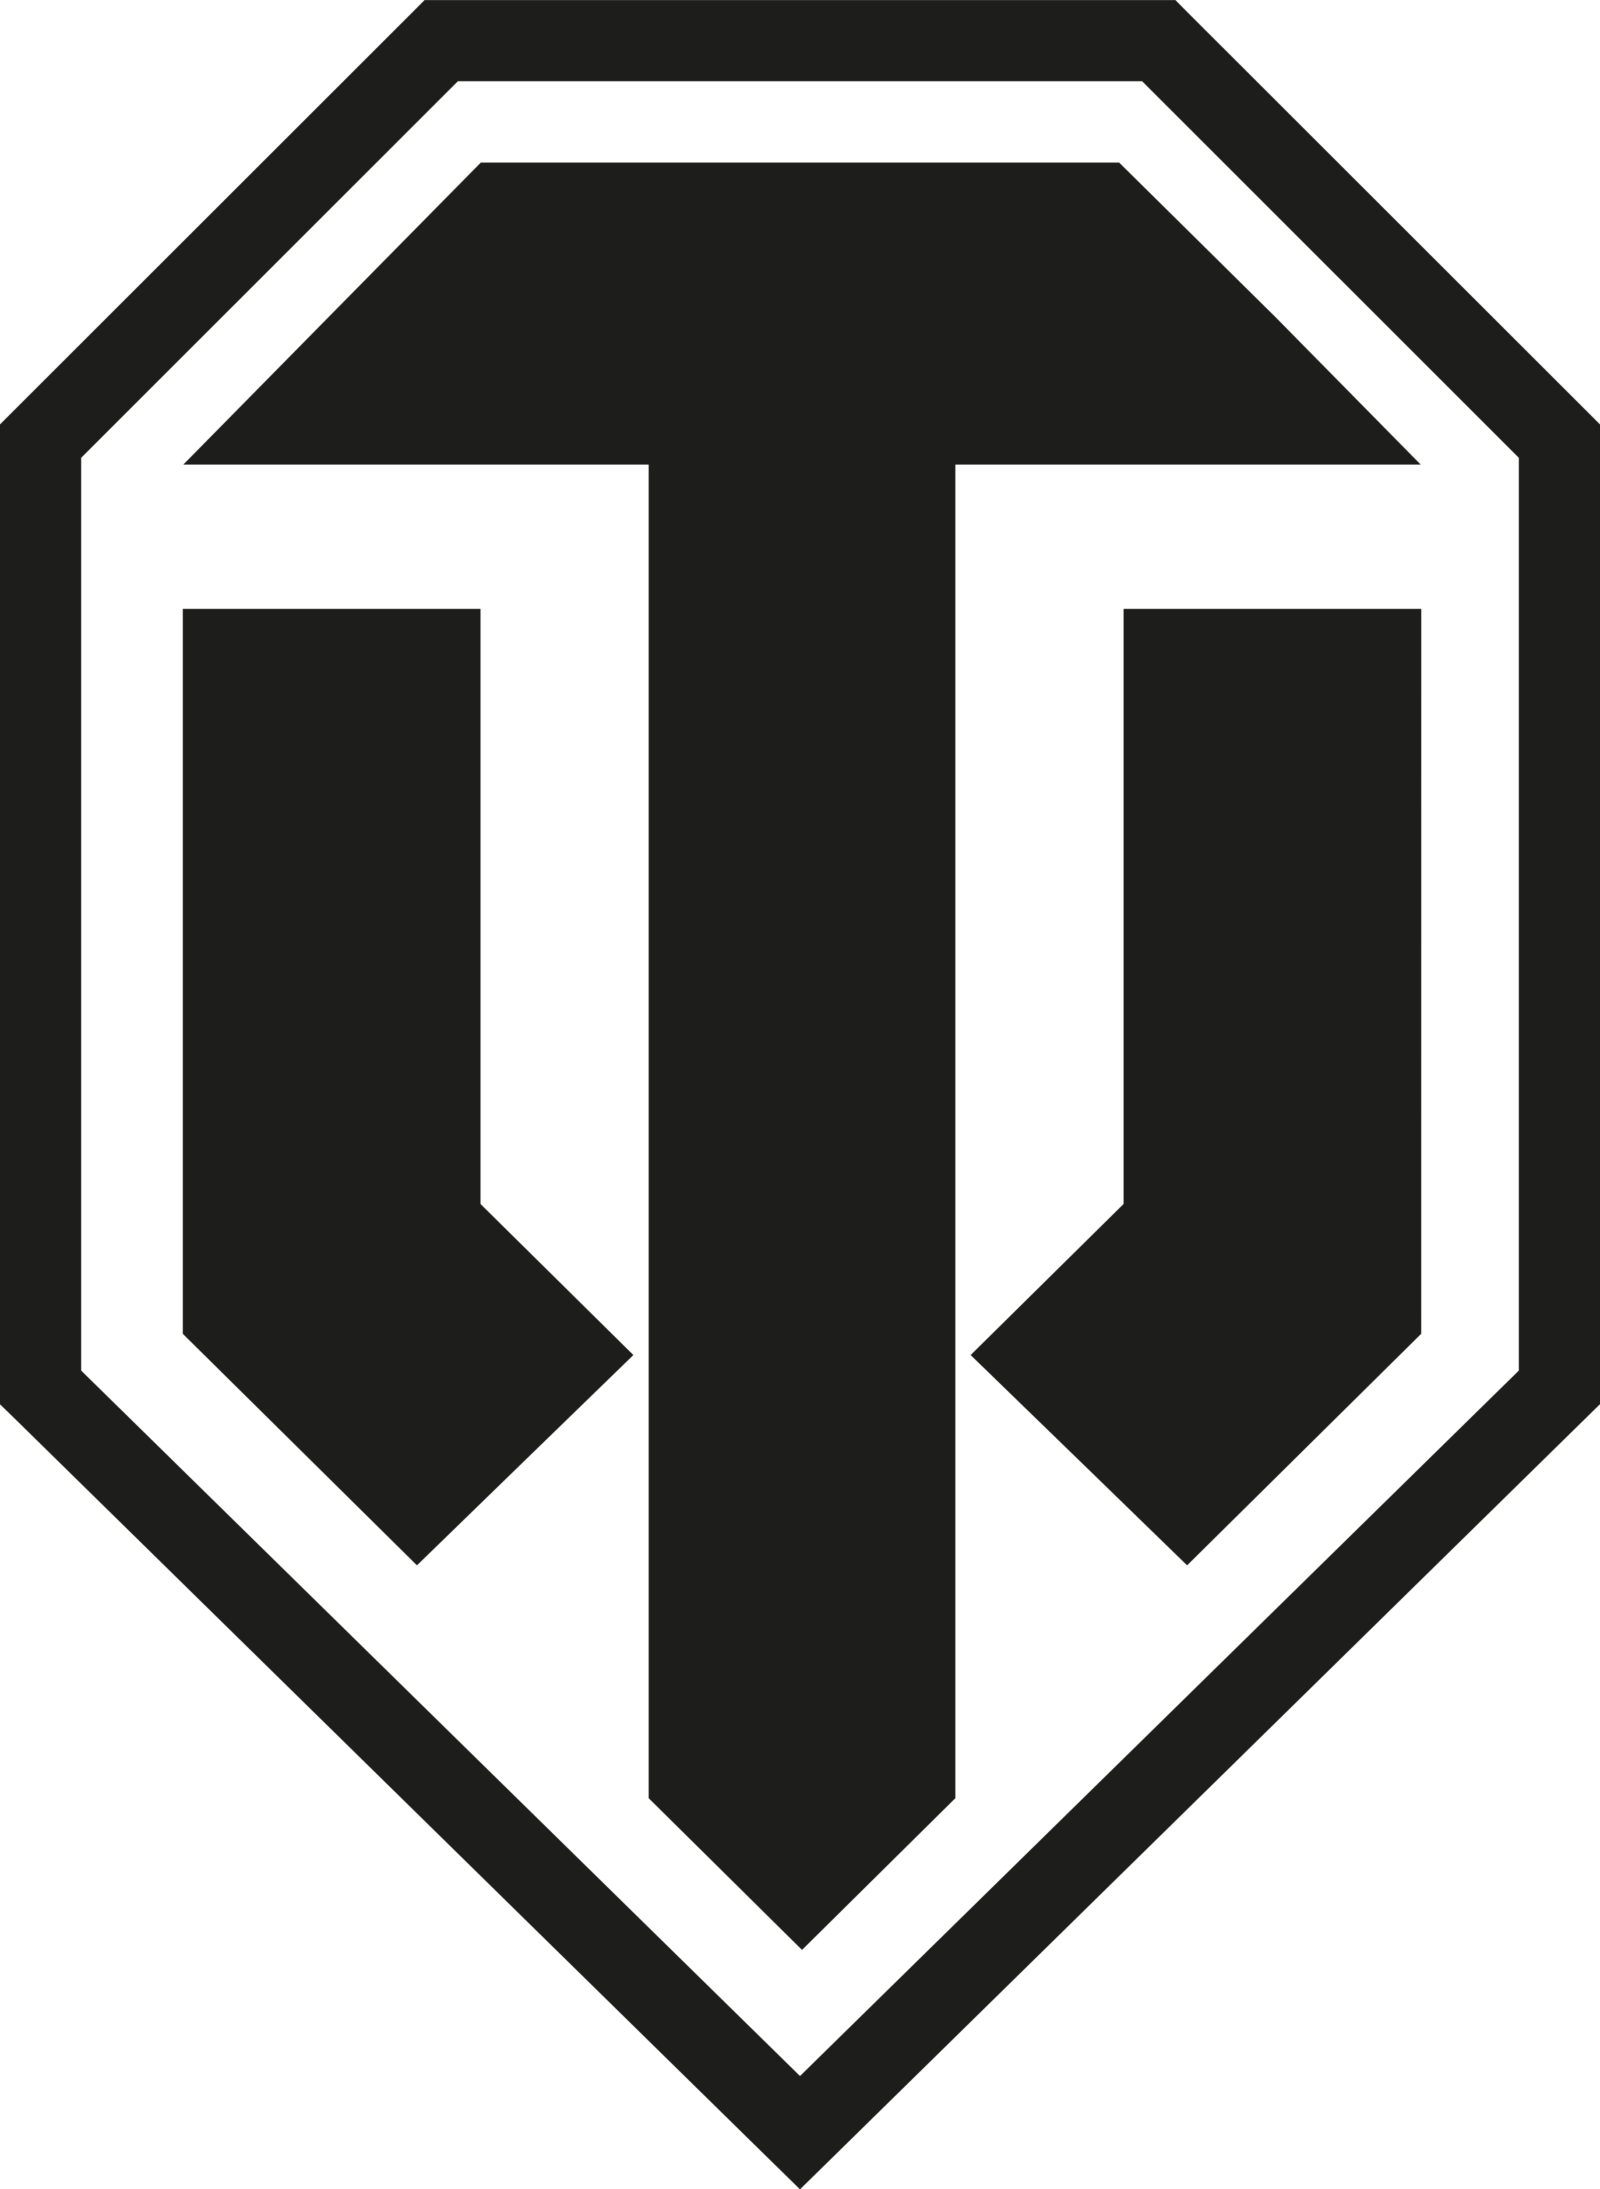 World Of Tanks Logo